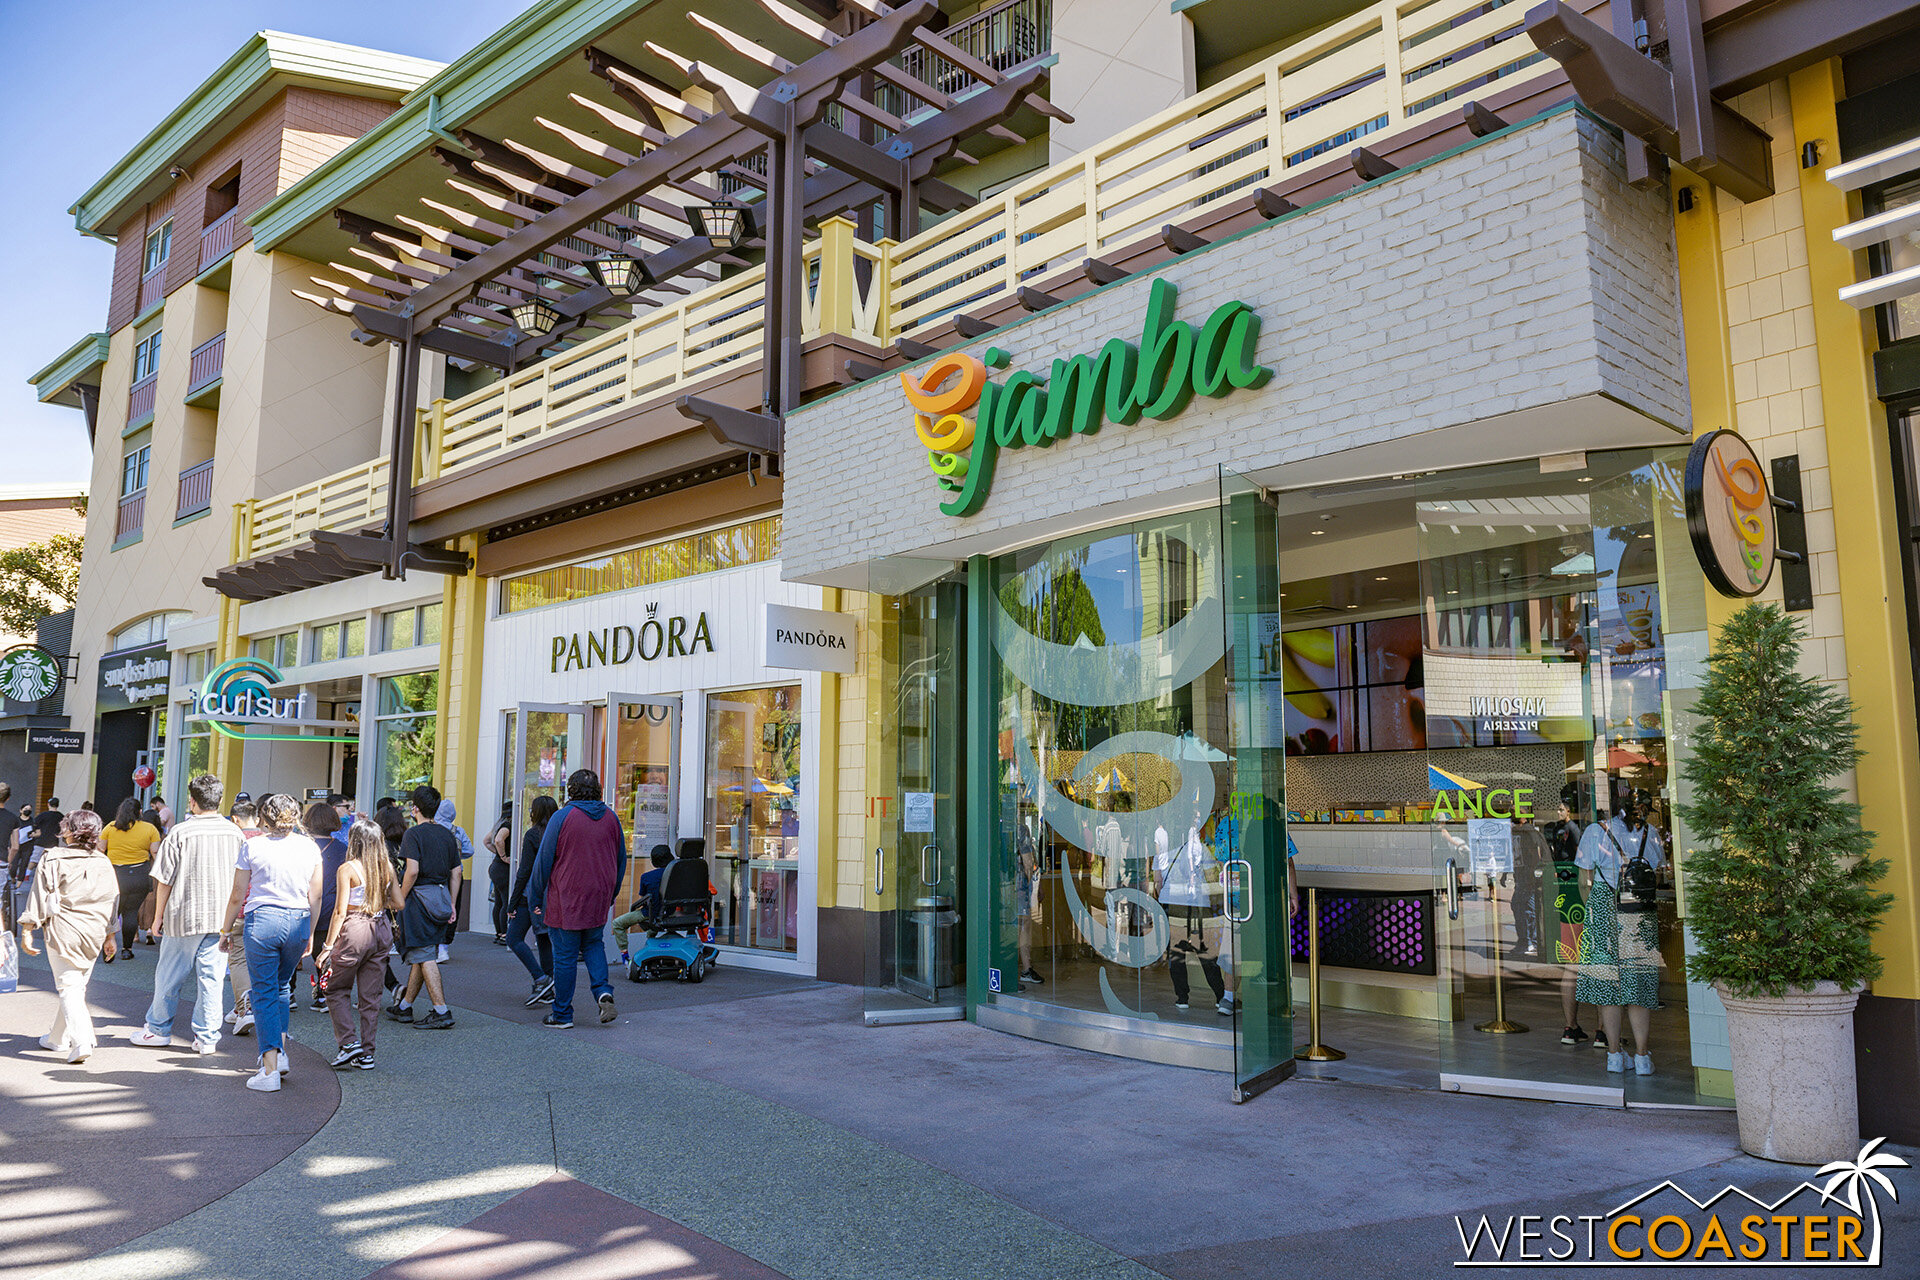  Last year, Jamba Juice underwent a facade renovation to freshen up its look.  So did Pandora, next door. 